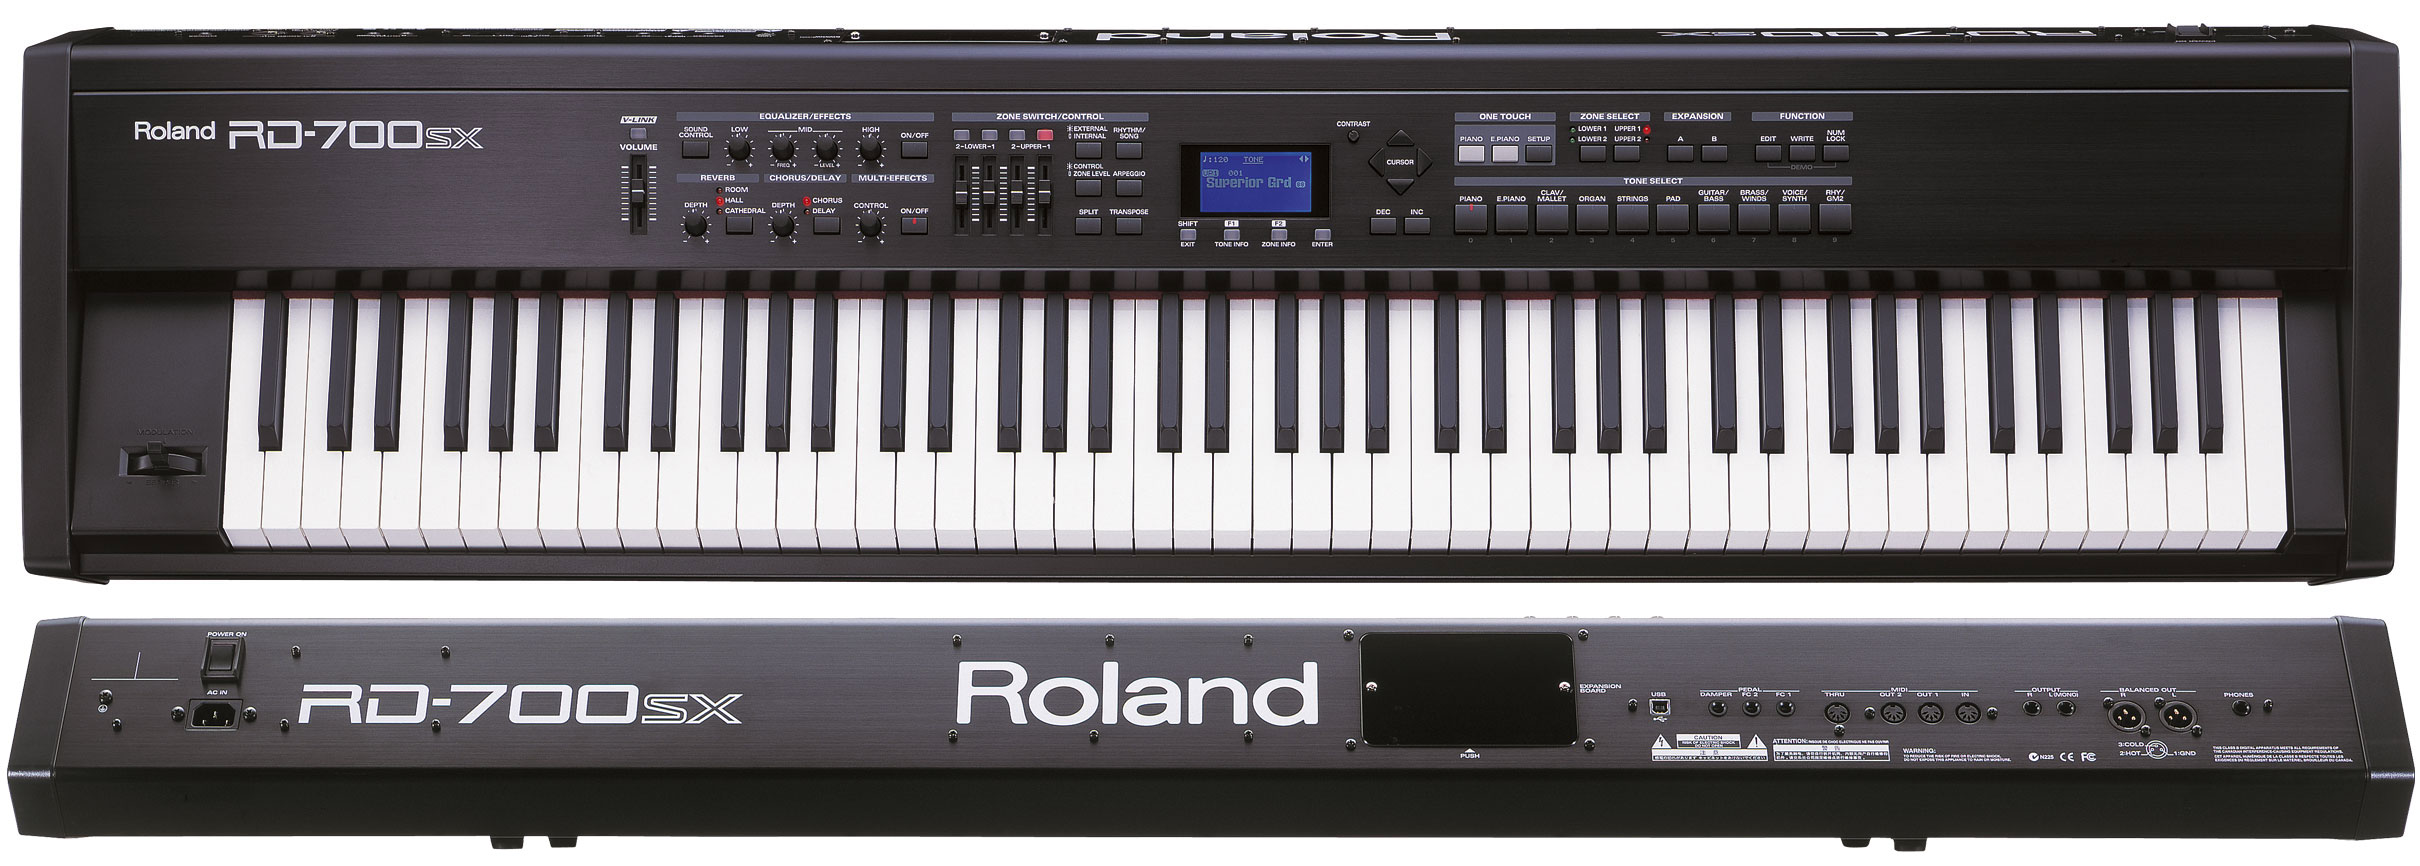 Roland RD-700NX ローランド 価格比較: 浦野最速ののブログ